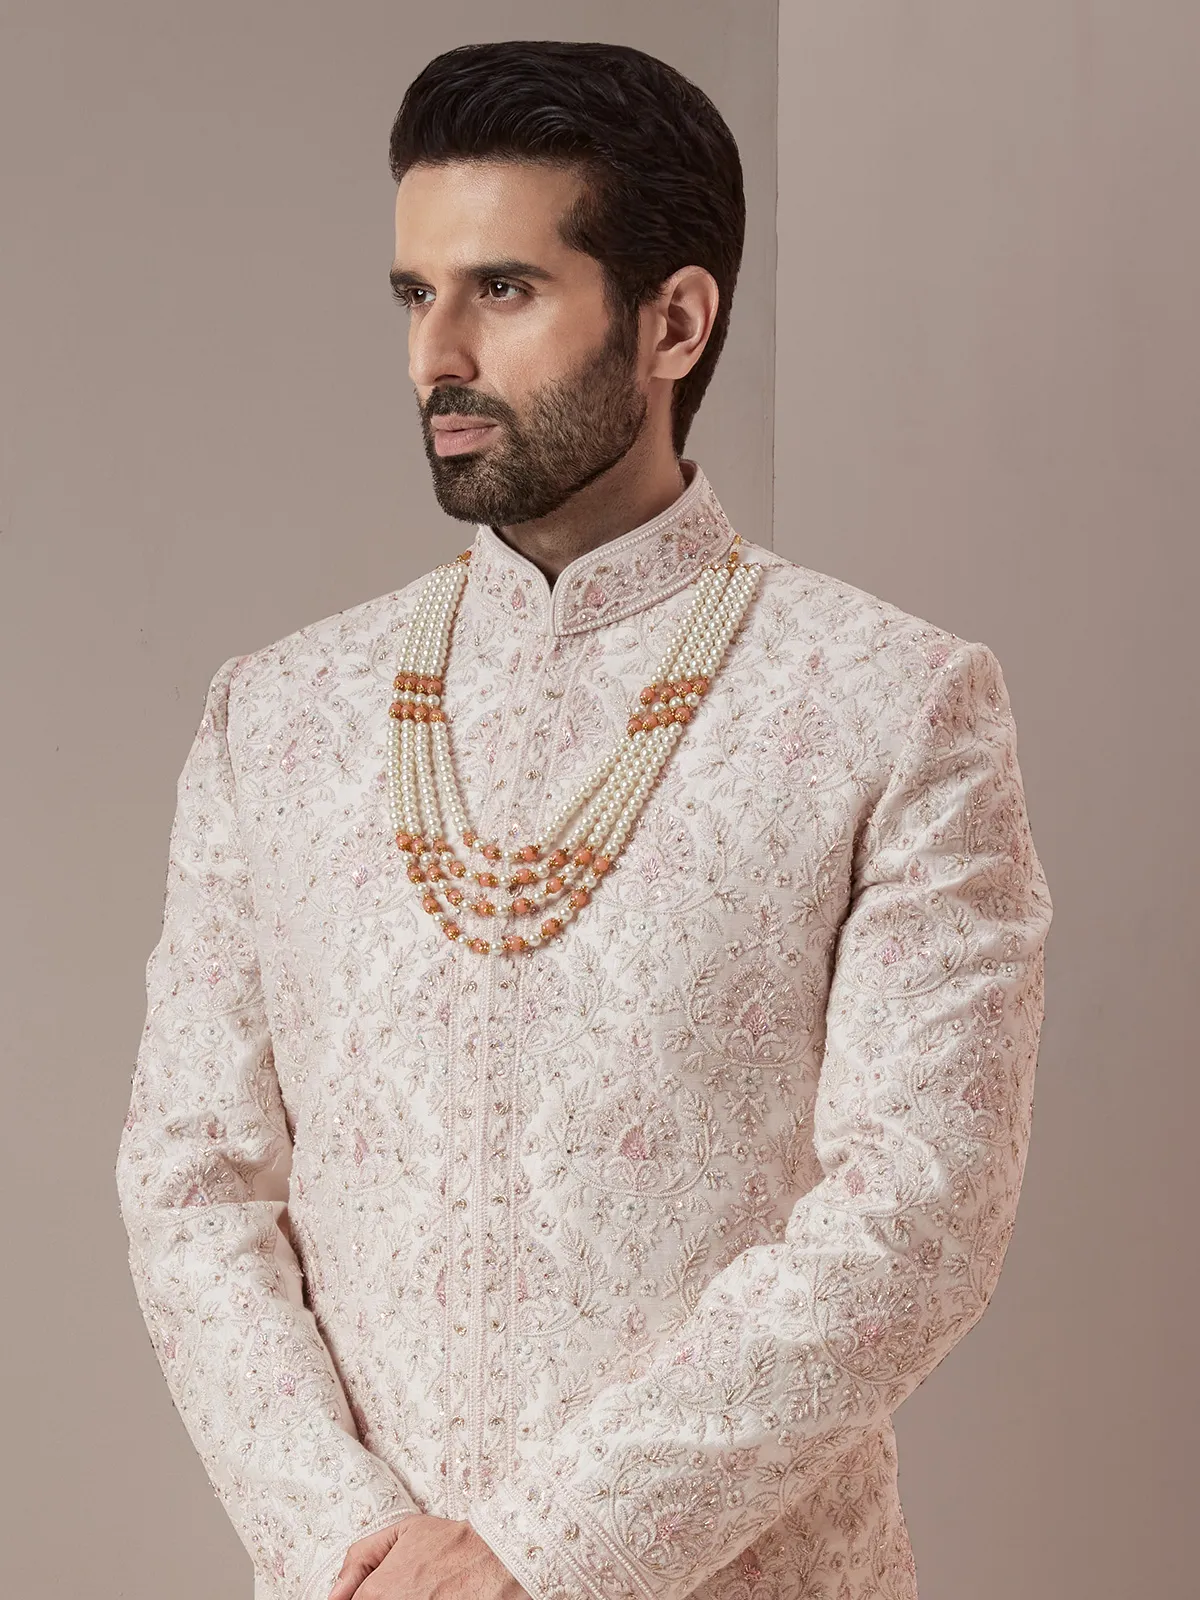 Raw silk light pink groom and wedding look sherwani